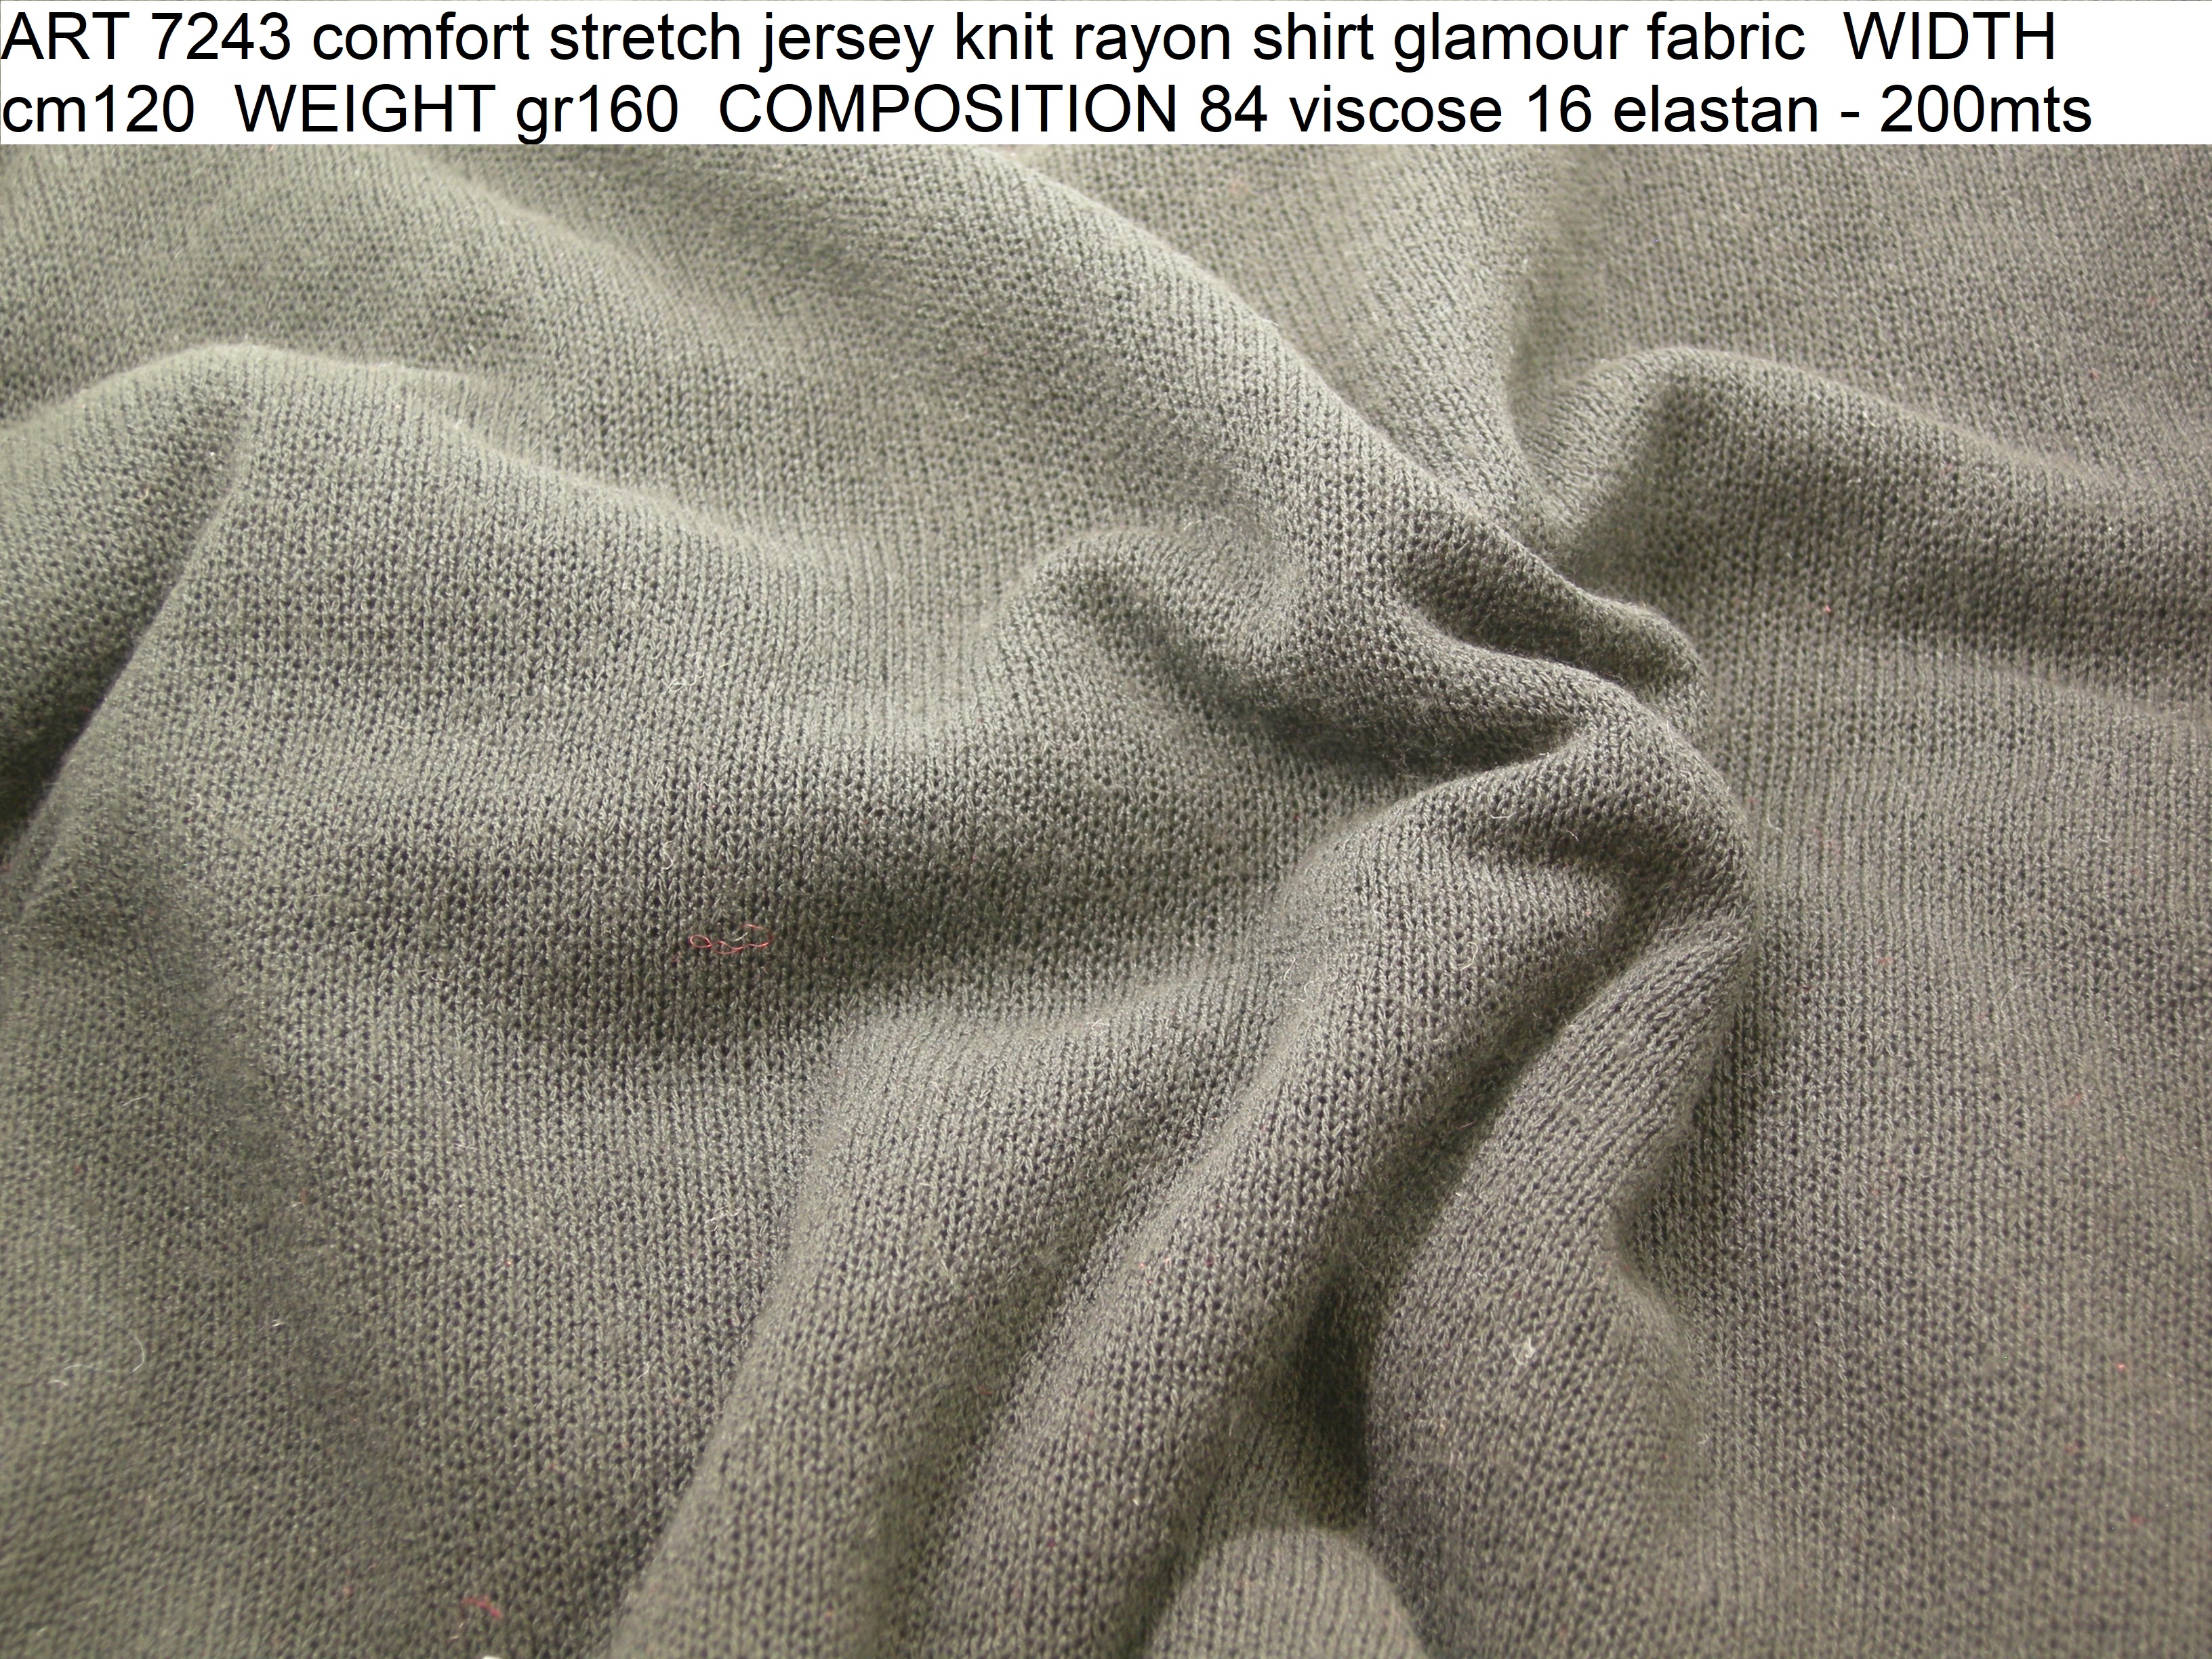 ART 7243 comfort stretch jersey knit rayon shirt glamour fabric WIDTH cm120 WEIGHT gr160 COMPOSITION 84 viscose 16 elastan - 200mts